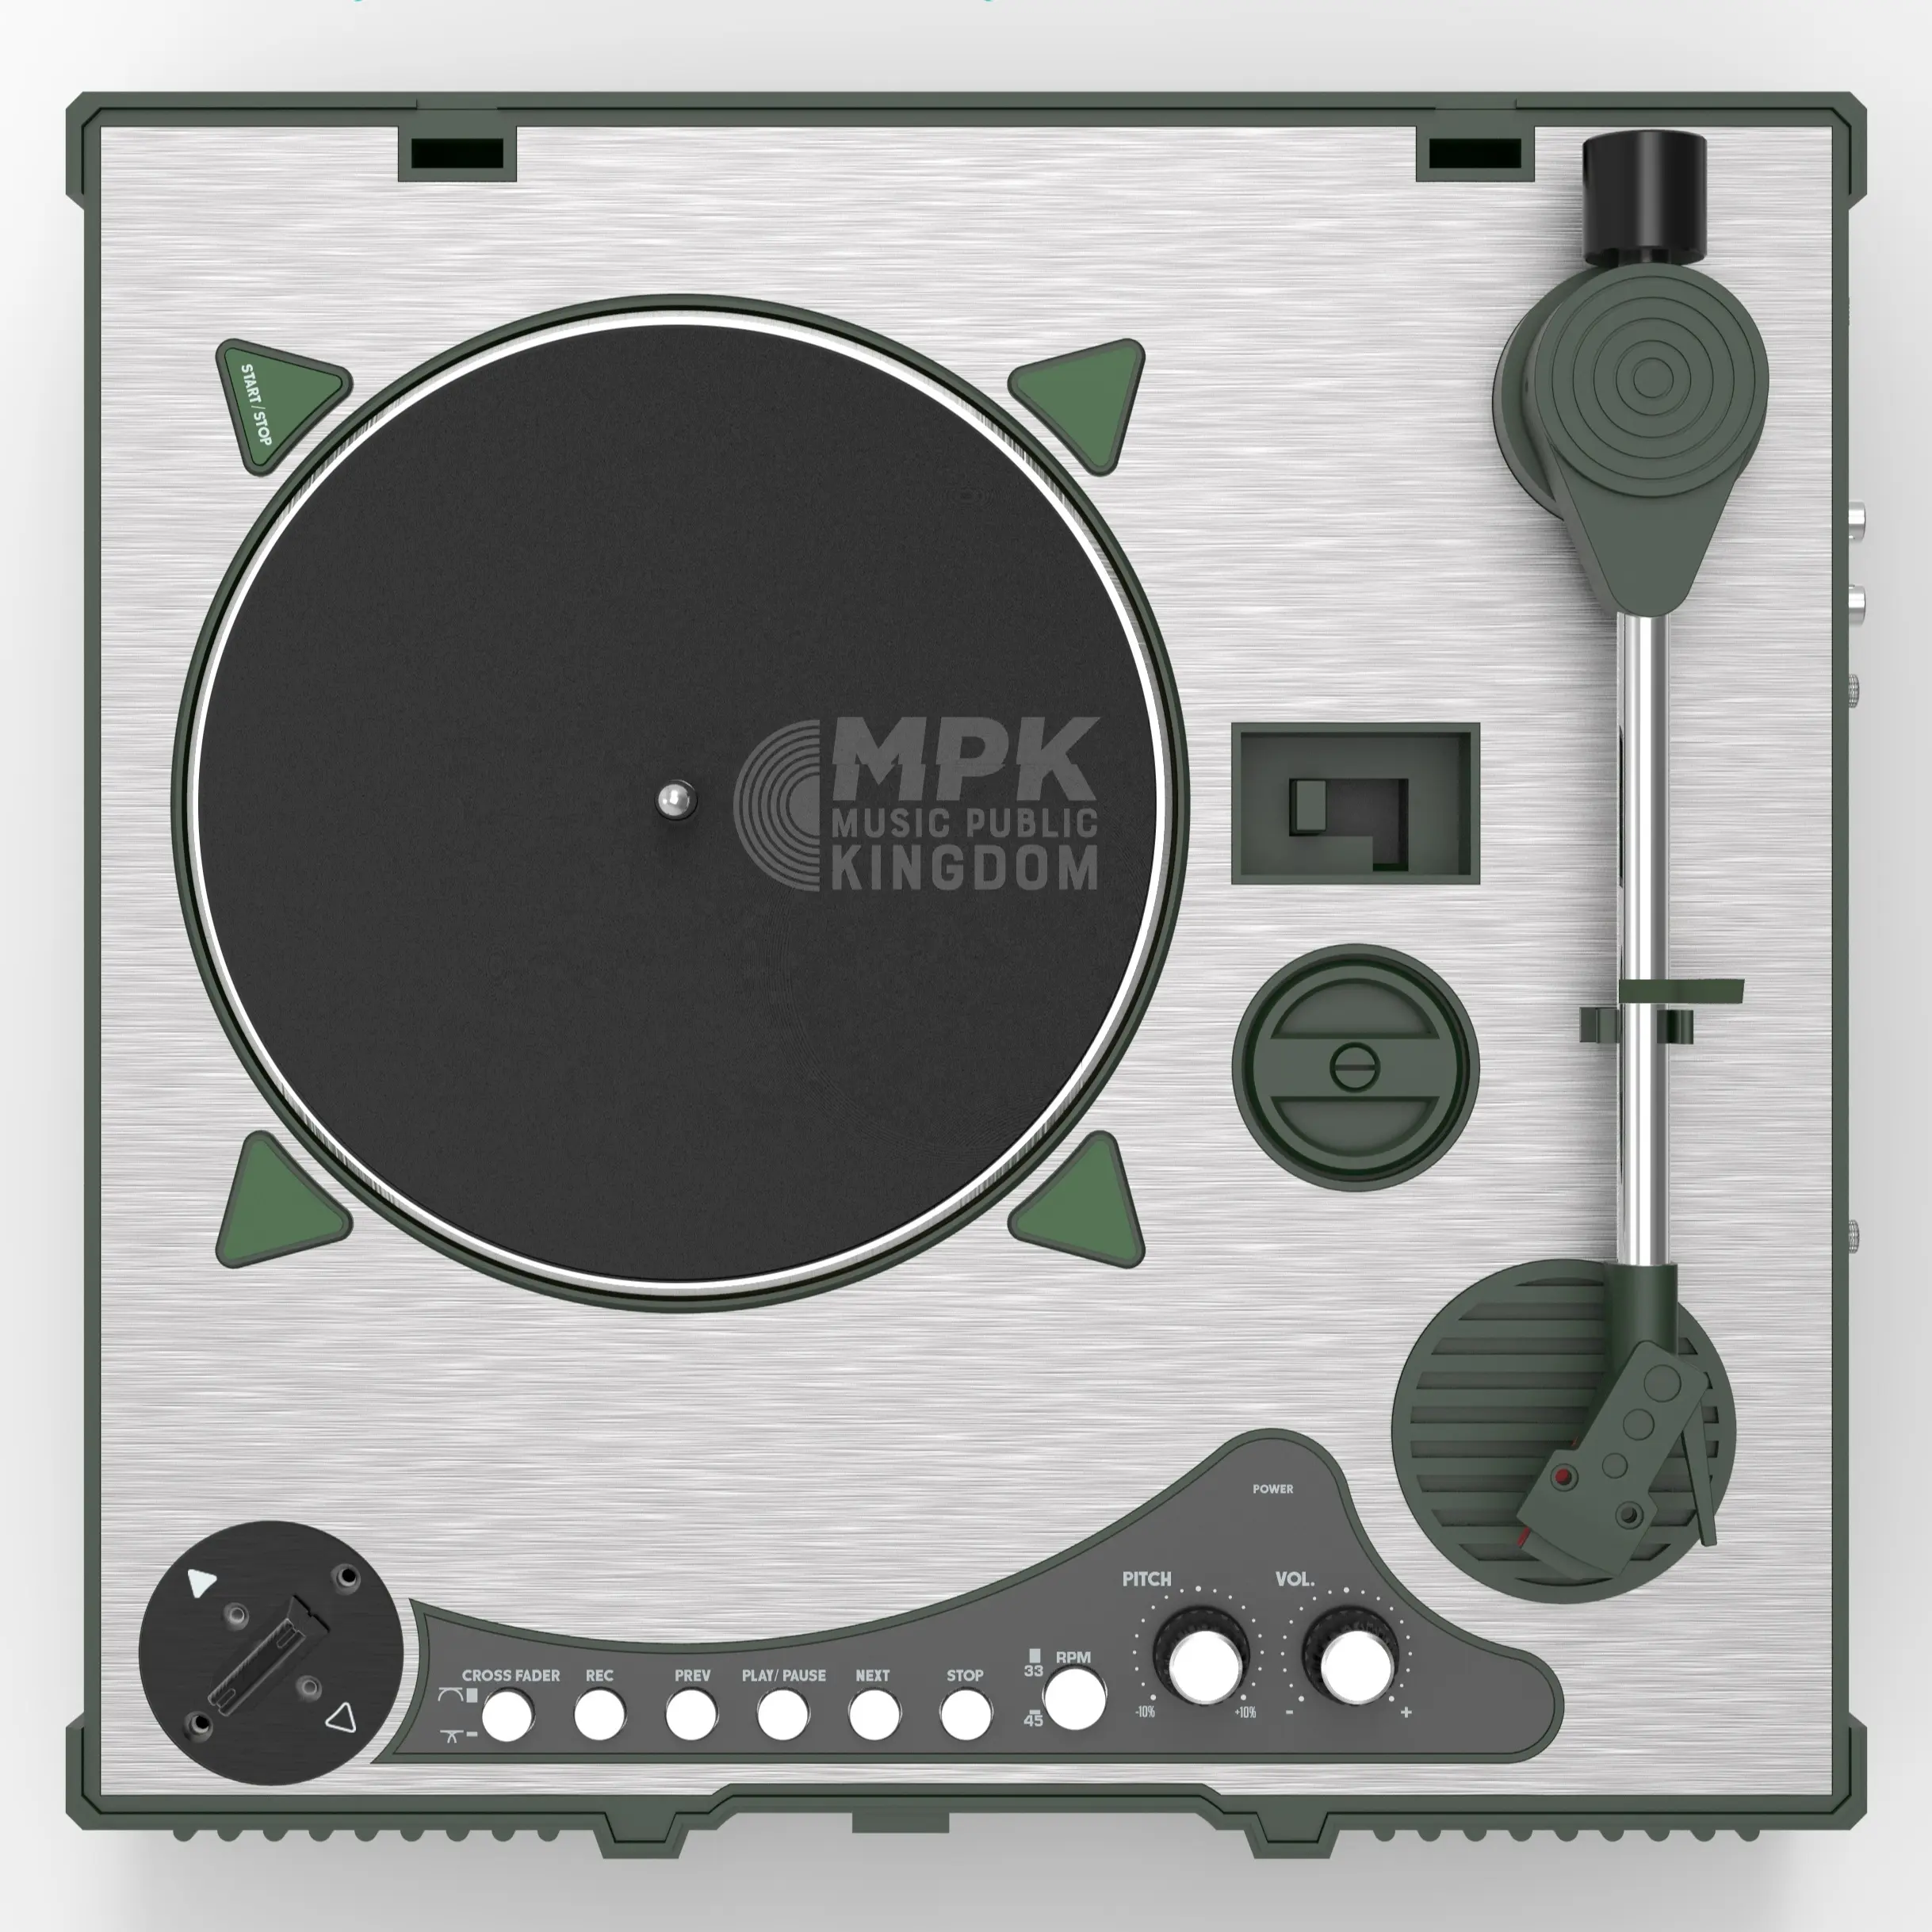 Reproductor de música portátil para DJ LP, dispositivo moderno con interruptor de tobogán incorporado, con USB para reproducir y grabar, Tocadiscos